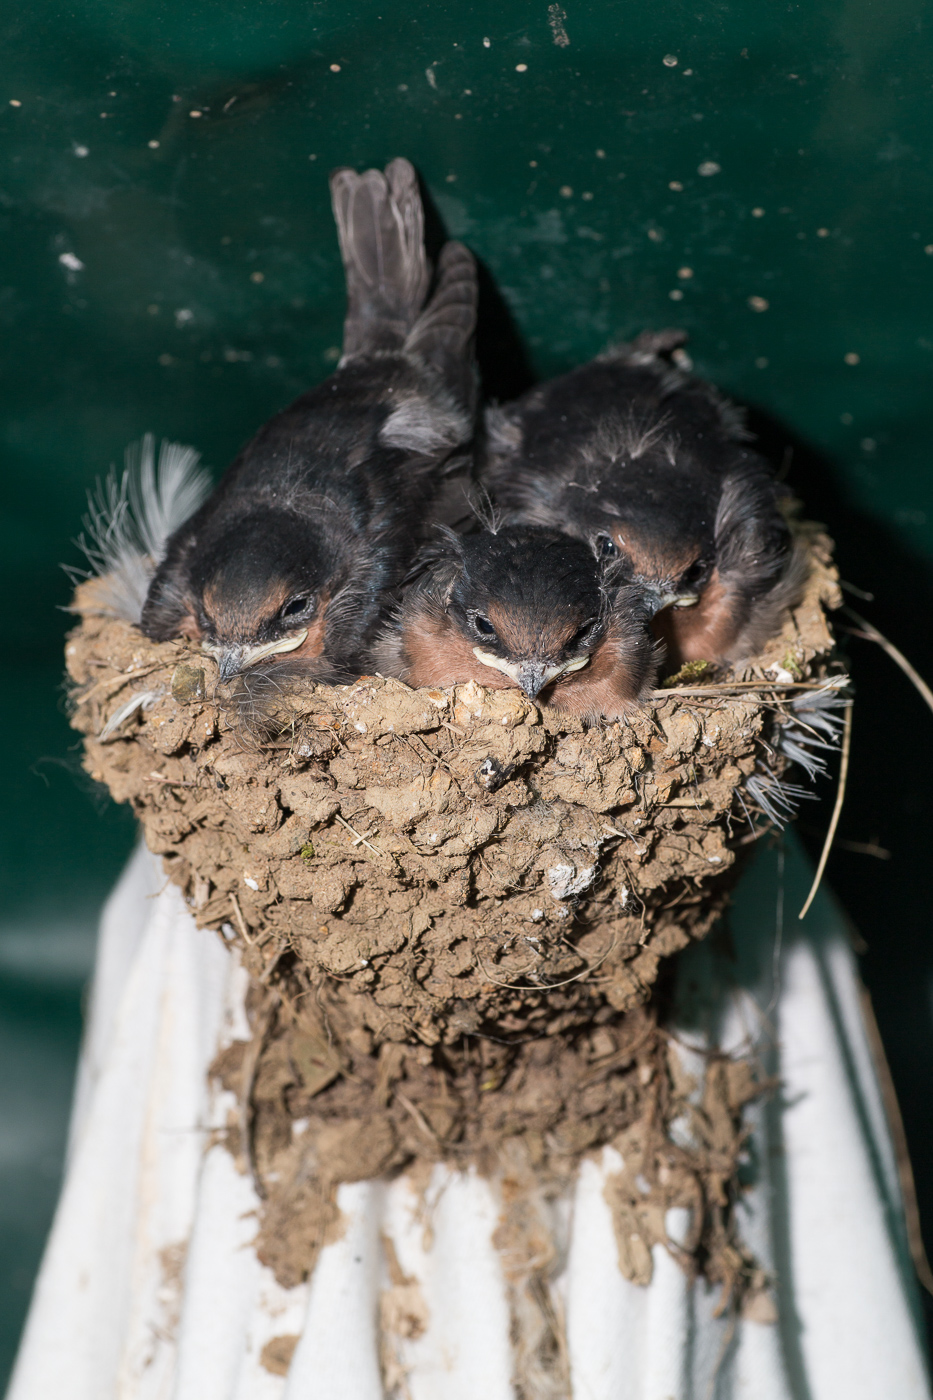 Swallow chicks near bursting from their nest